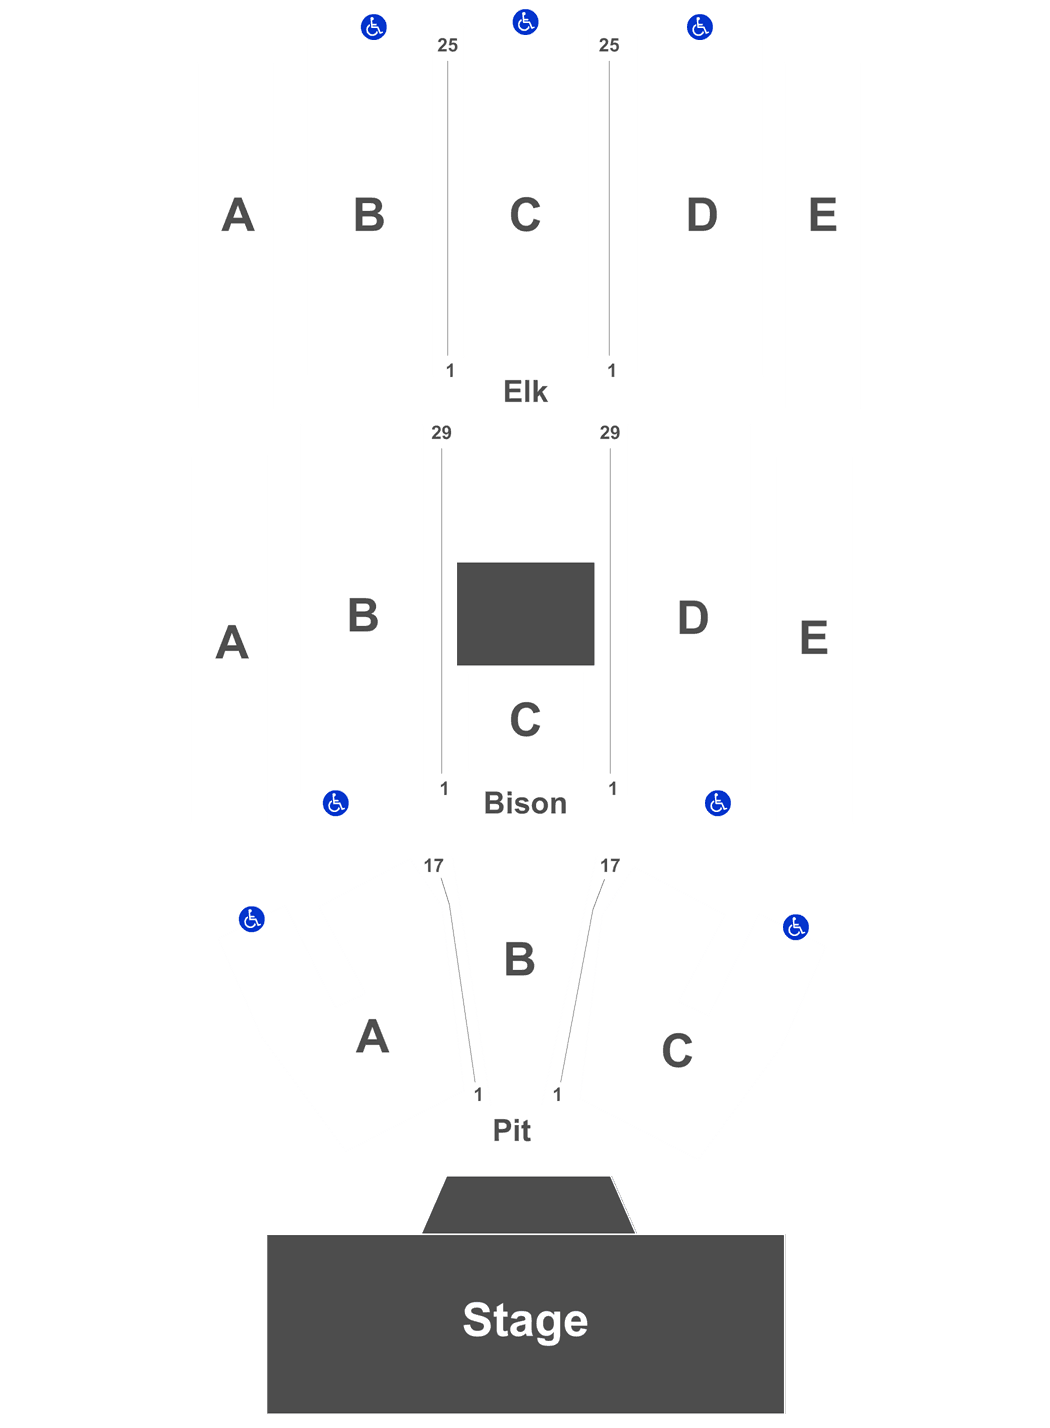 Pinewood Bowl Seating Chart